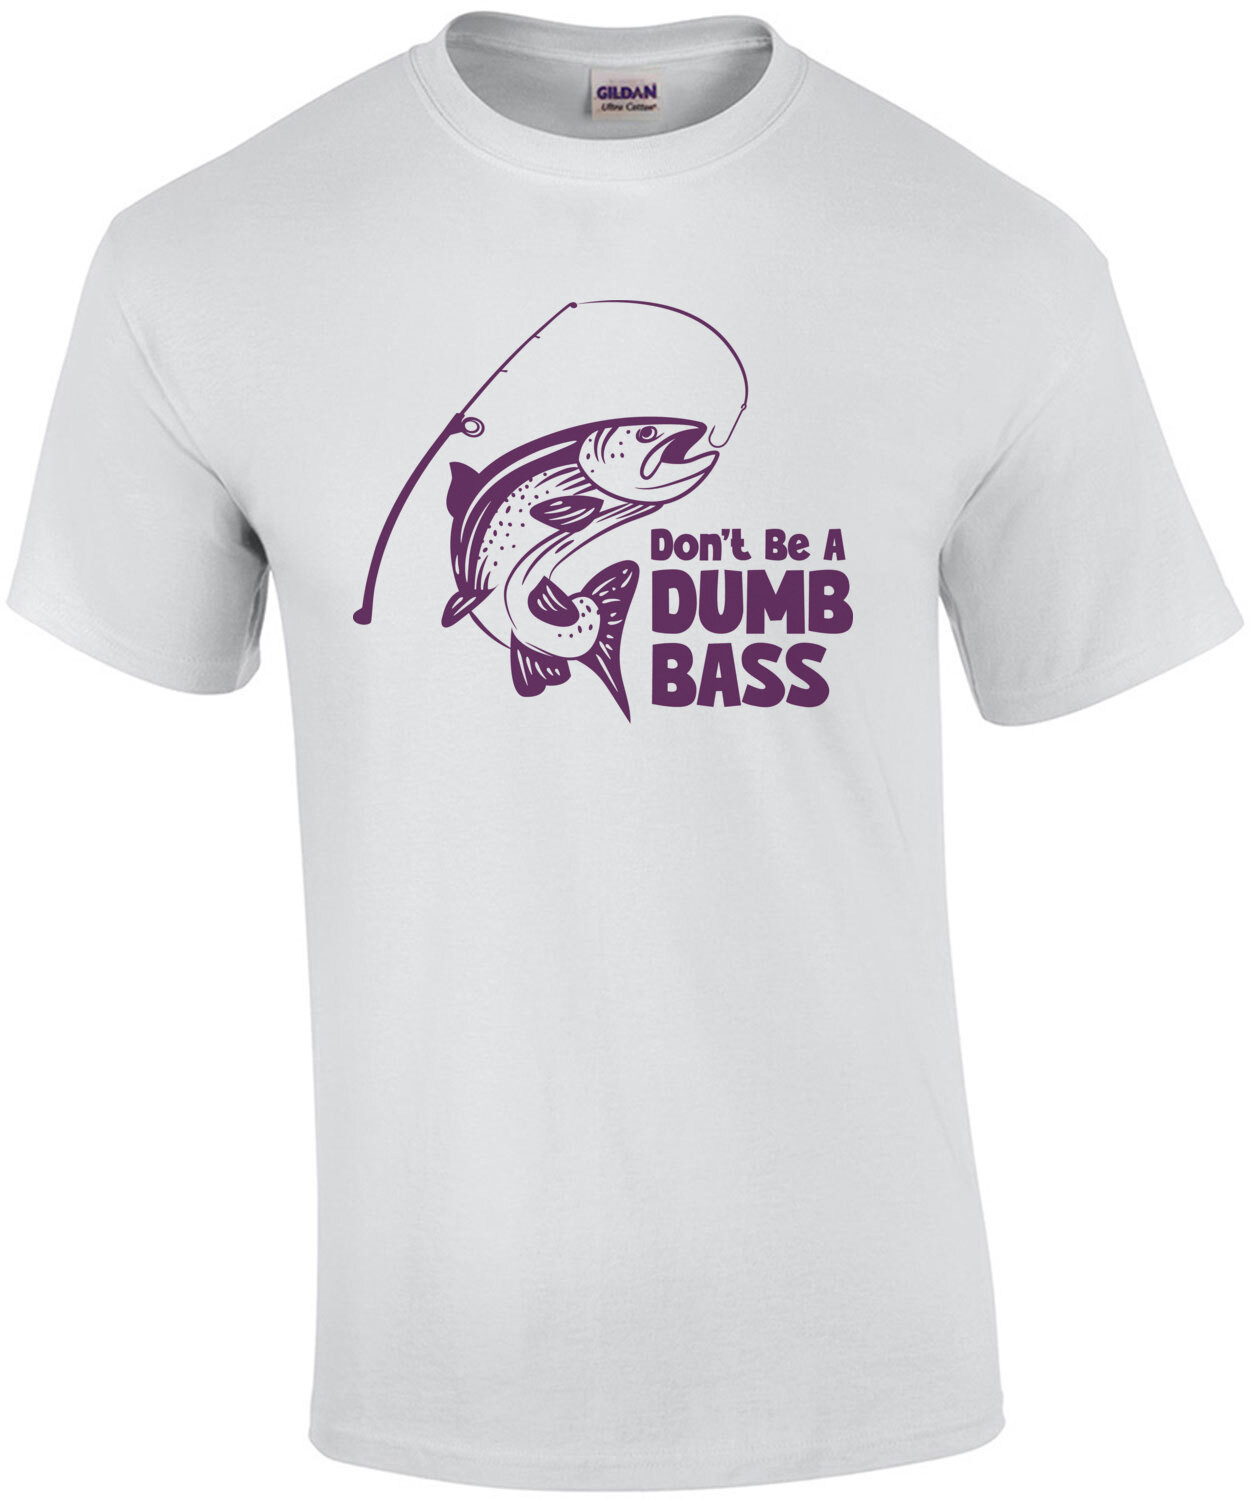 Don't Be a Dumb Bass - Funny Fishing Pun T-Shirt